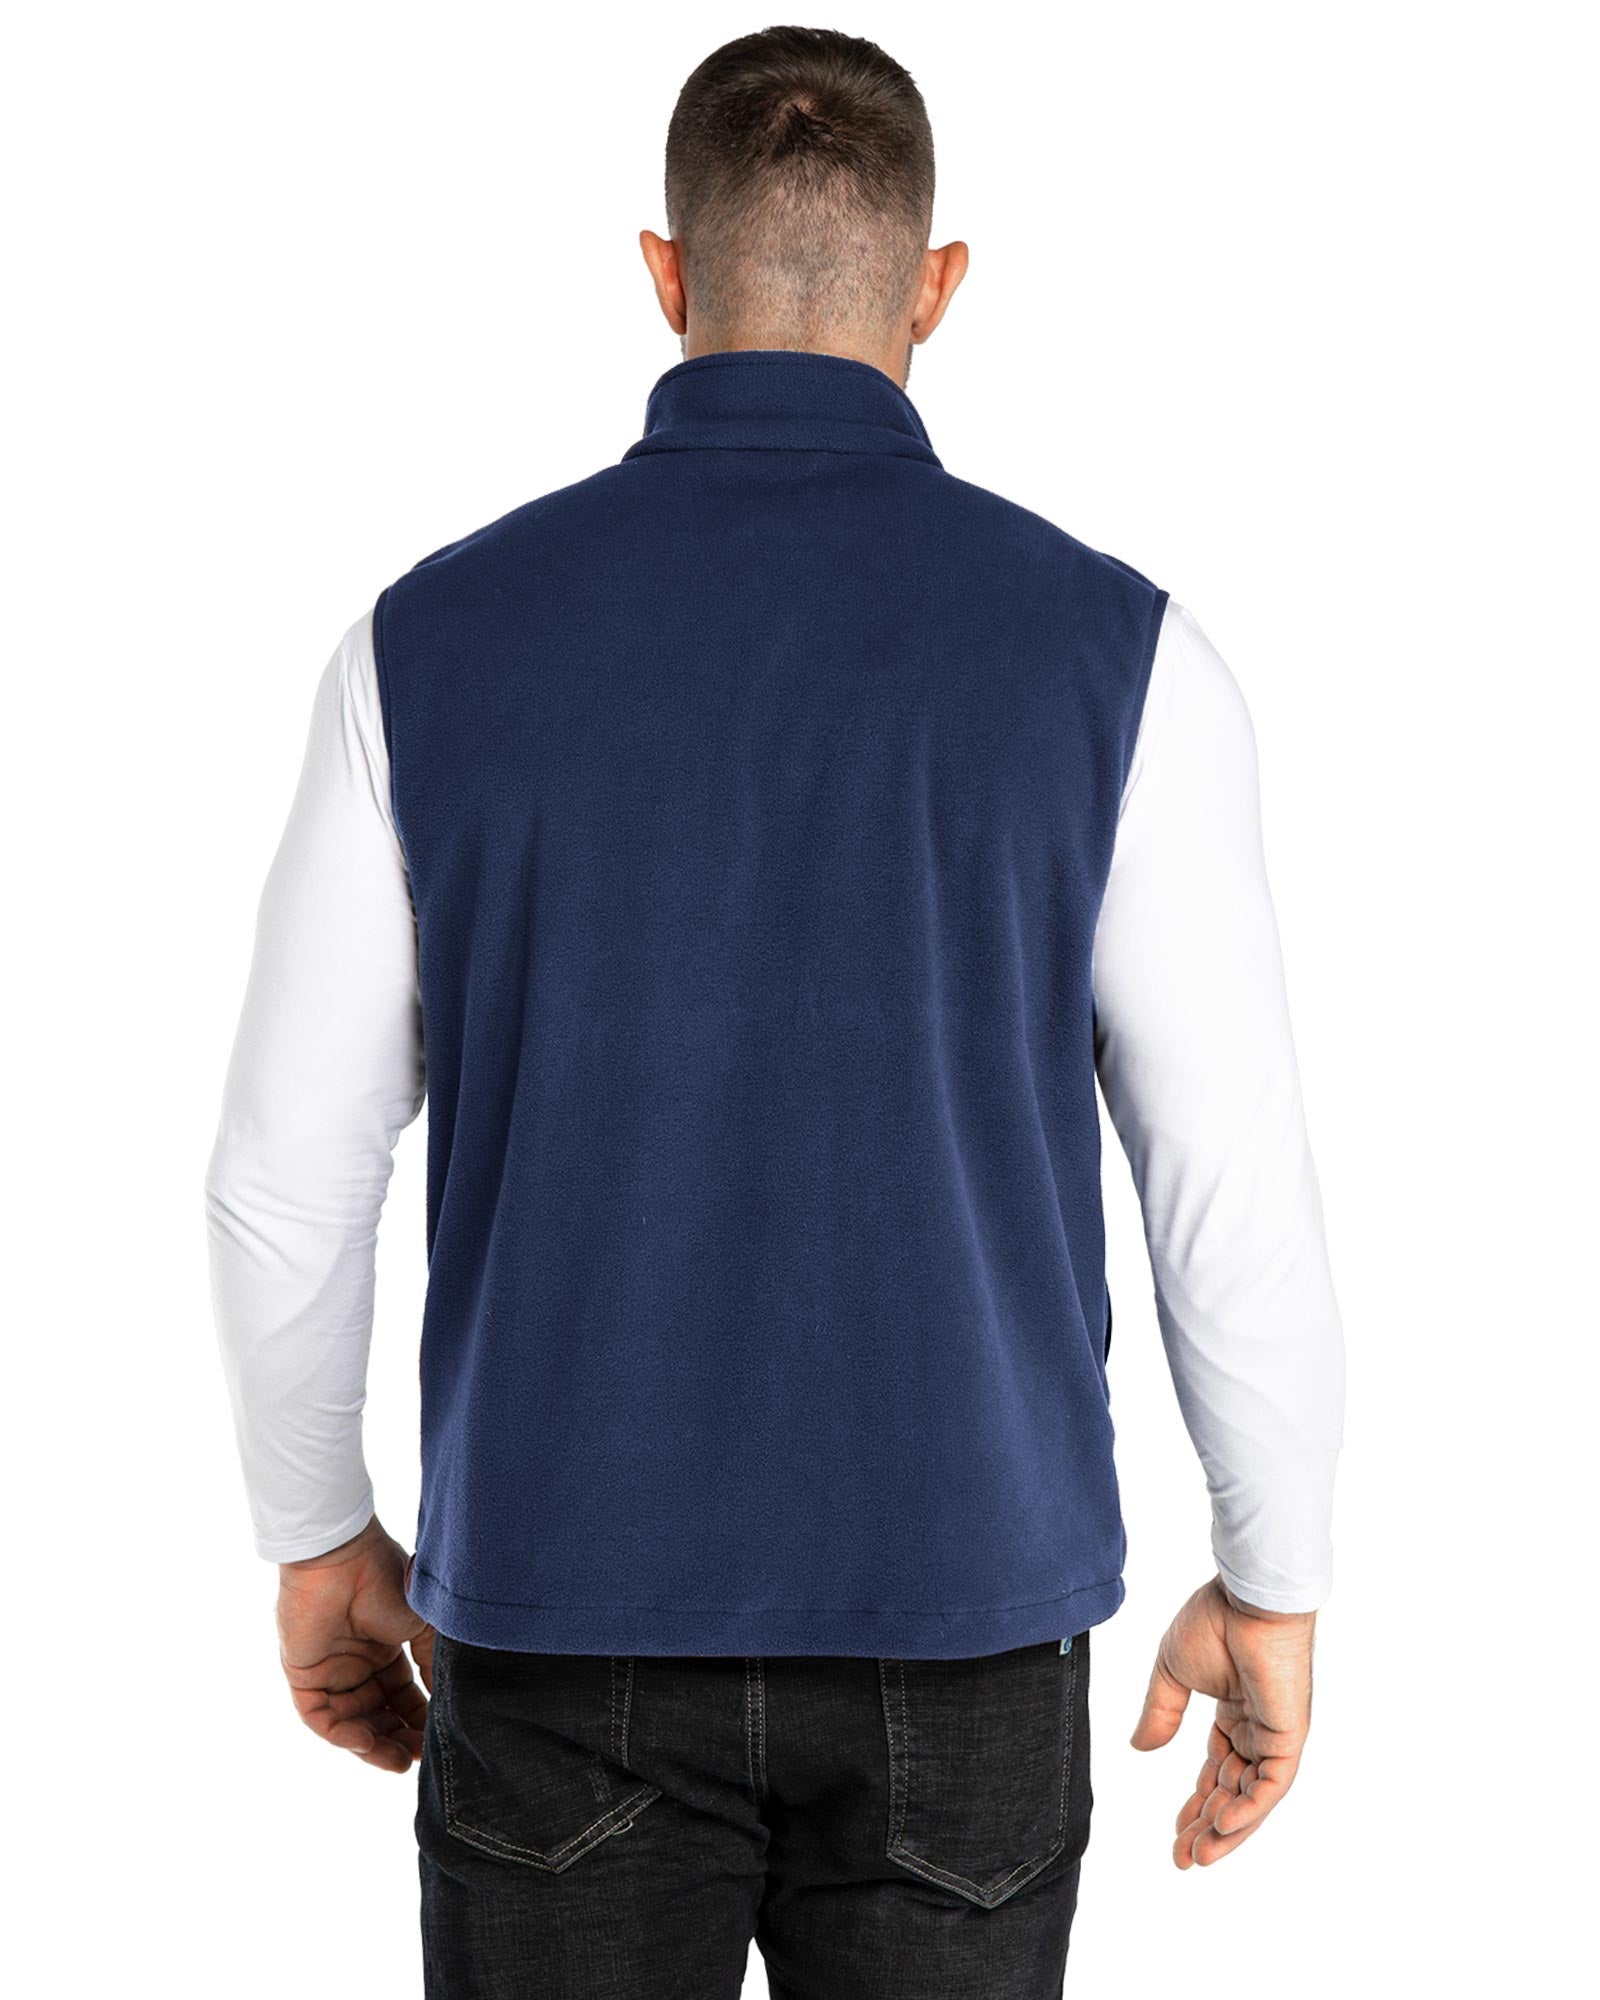 Men's 0.90 lbs Fleece Vest Outerwear with 4 Deep Pockets – 33,000ft